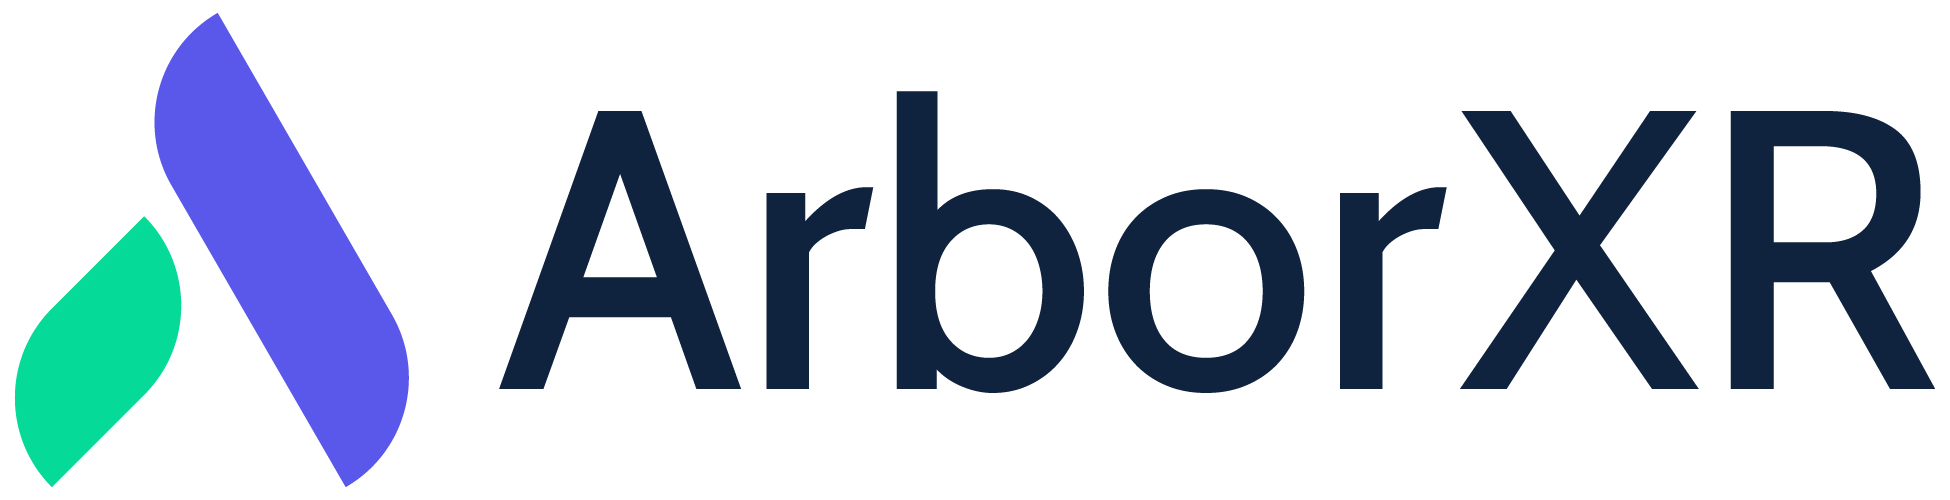 ArborXR Logo